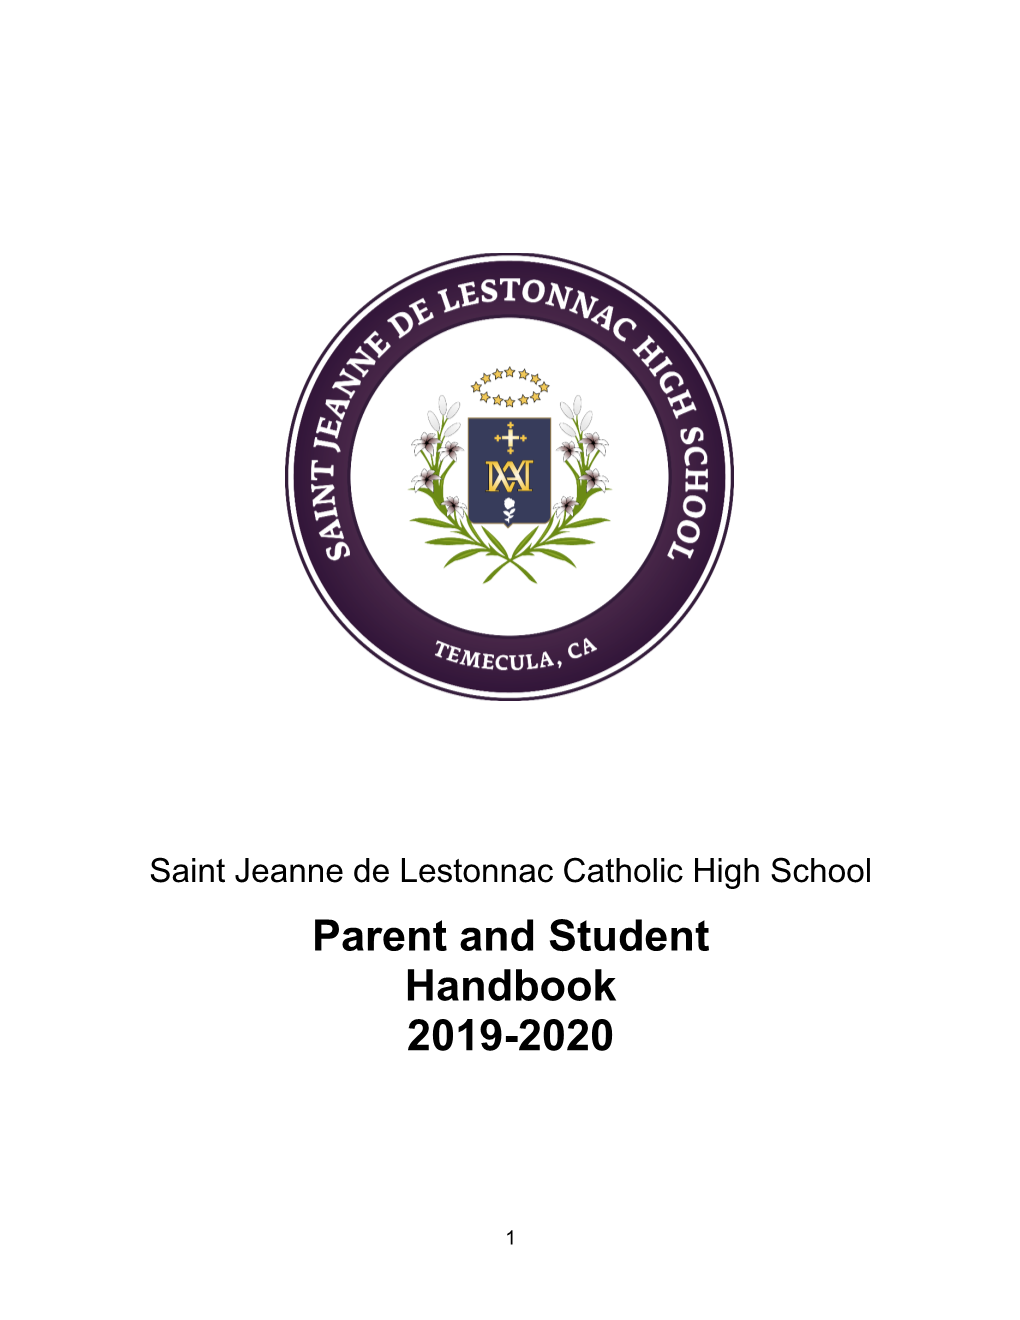 Parent and Student Handbook 2019-2020